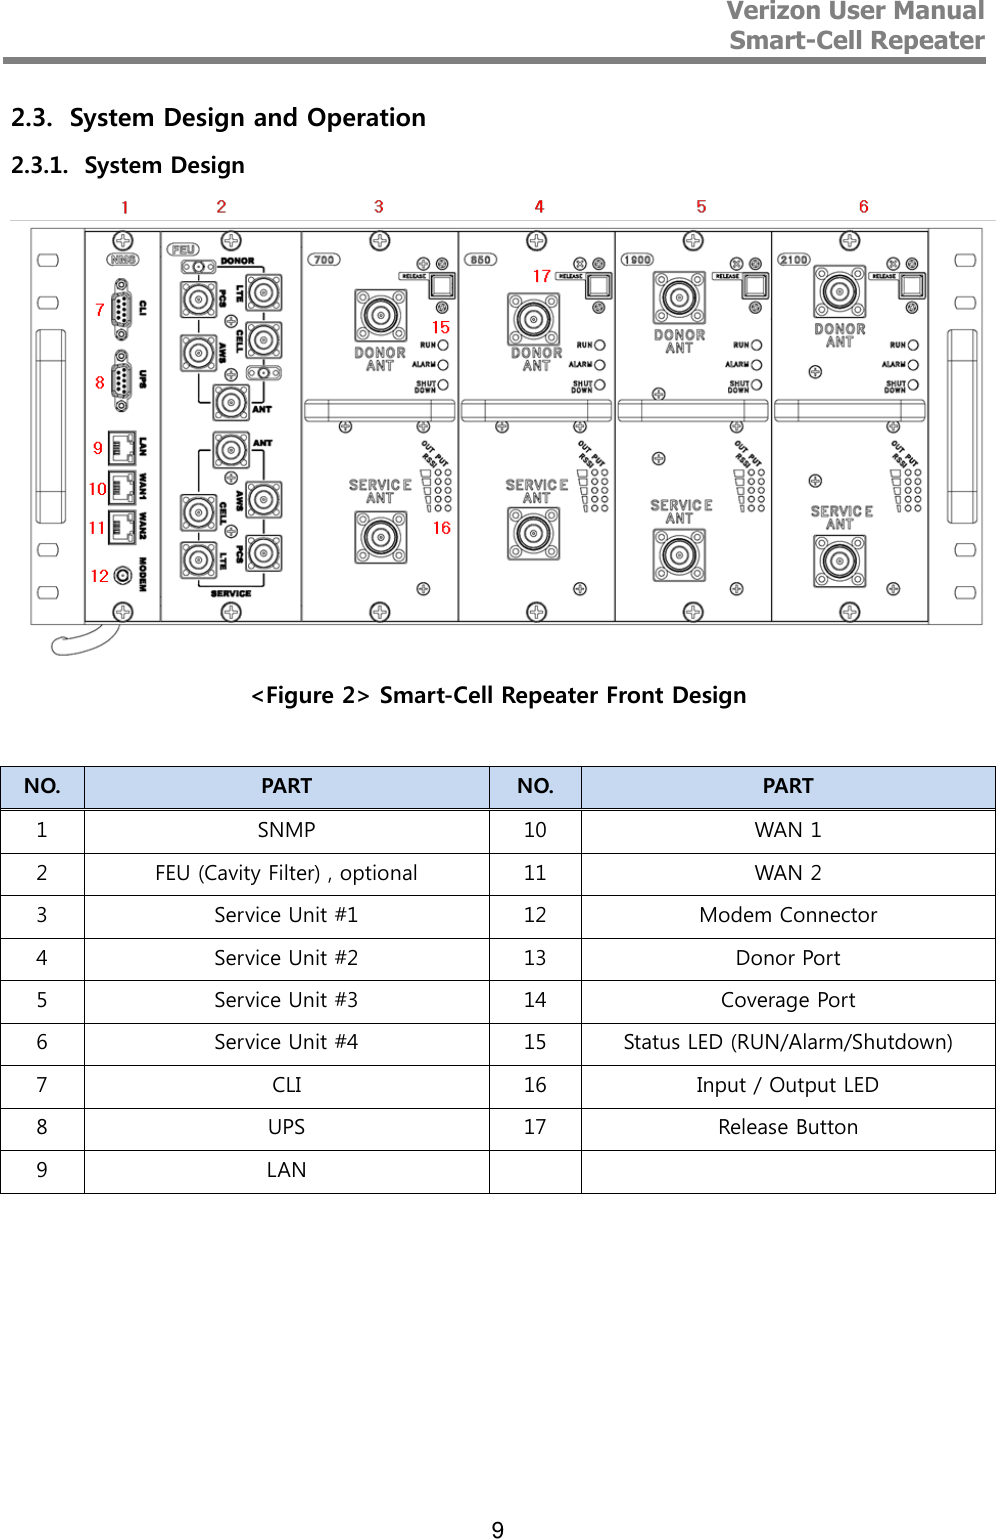 Verizon User Manual  Smart-Cell Repeater   9 2.3. System Design and Operation 2.3.1. System Design  &lt;Figure 2&gt; Smart-Cell Repeater Front Design  NO. PART NO. PART 1 SNMP 10 WAN 1 2 FEU (Cavity Filter) , optional 11 WAN 2 3 Service Unit #1 12 Modem Connector 4 Service Unit #2 13 Donor Port 5 Service Unit #3 14 Coverage Port 6 Service Unit #4 15 Status LED (RUN/Alarm/Shutdown) 7 CLI 16 Input / Output LED 8 UPS 17 Release Button 9 LAN     